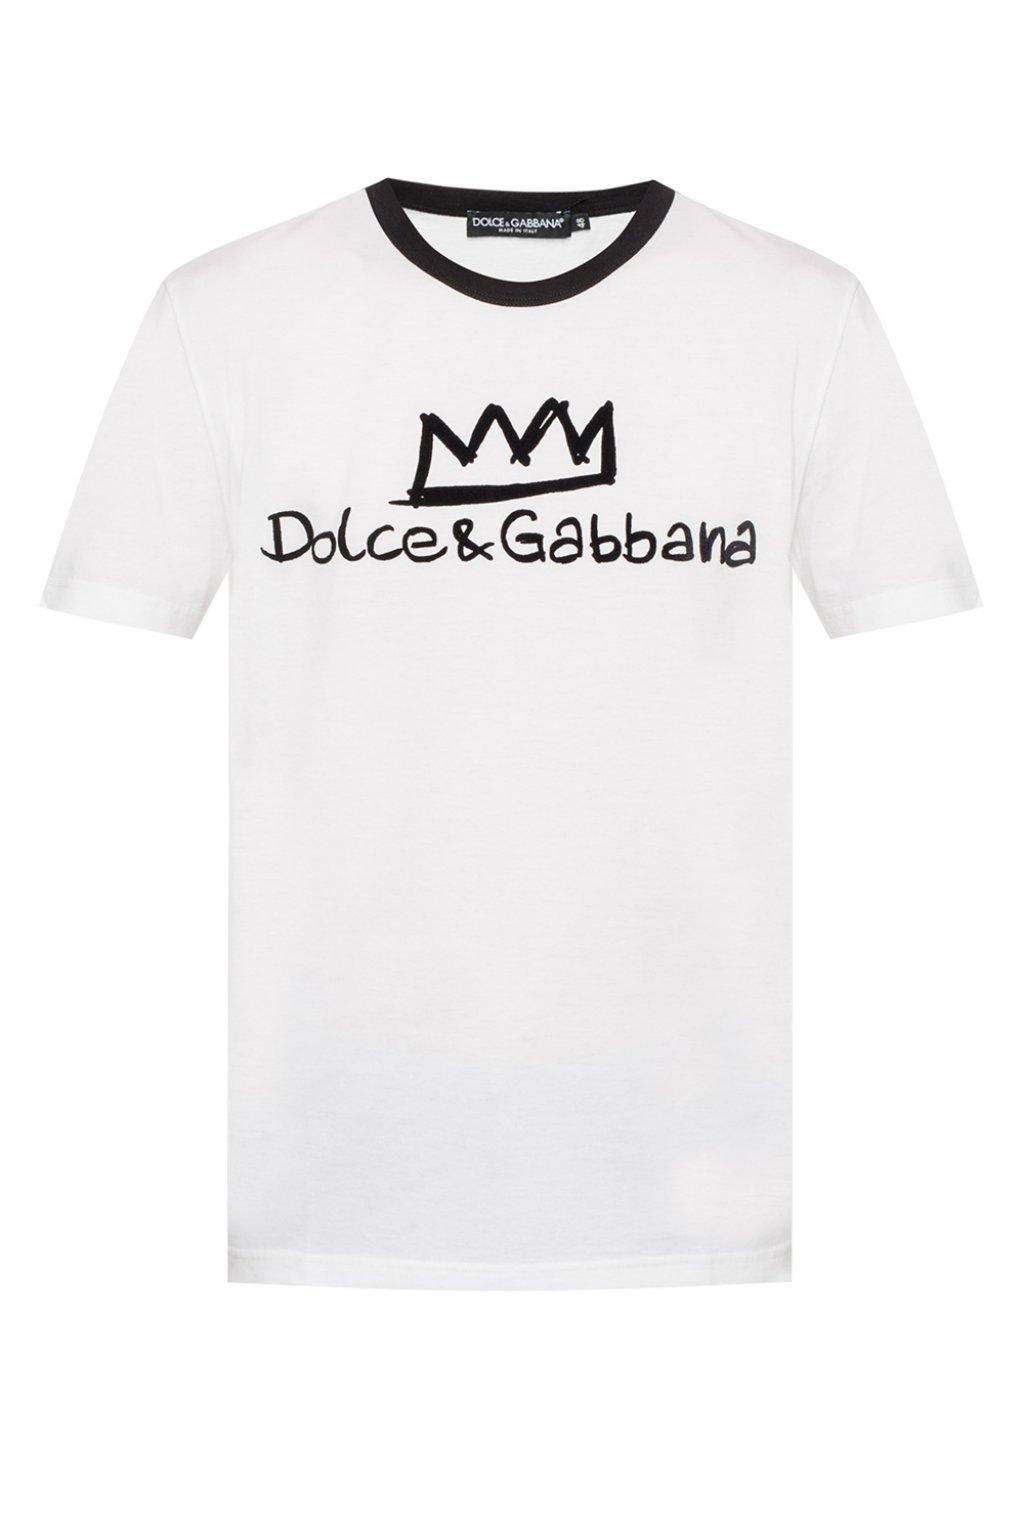 Dolce & Gabbana Cotton Logo-printed T-shirt in White for Men - Lyst